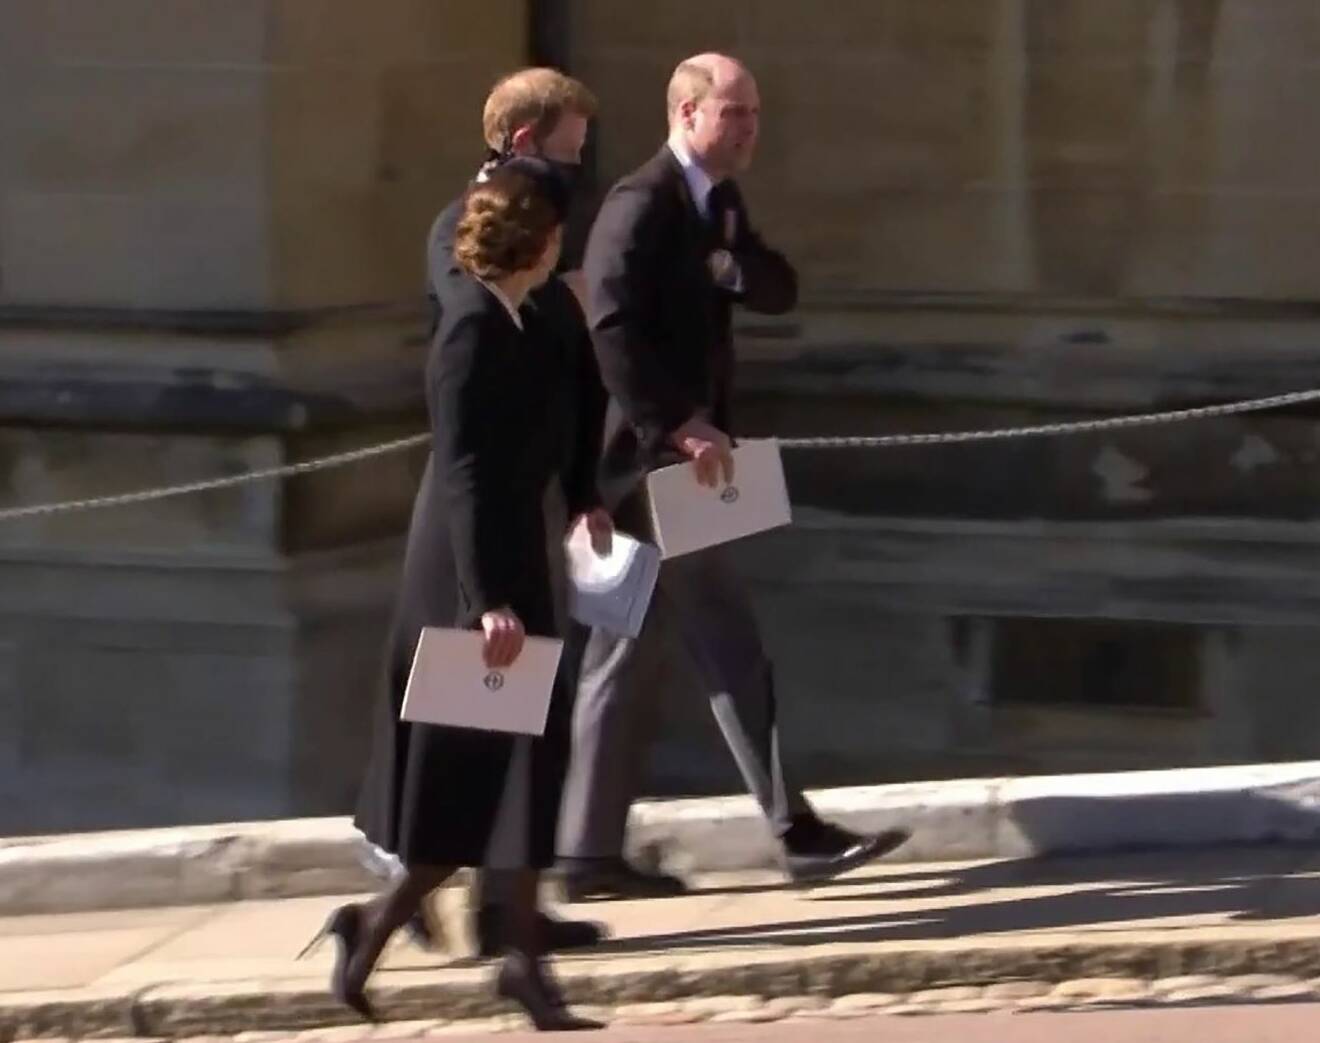 Prins William Prins Harry Hertiginnan Catherine Kate efter prins Philips begravning